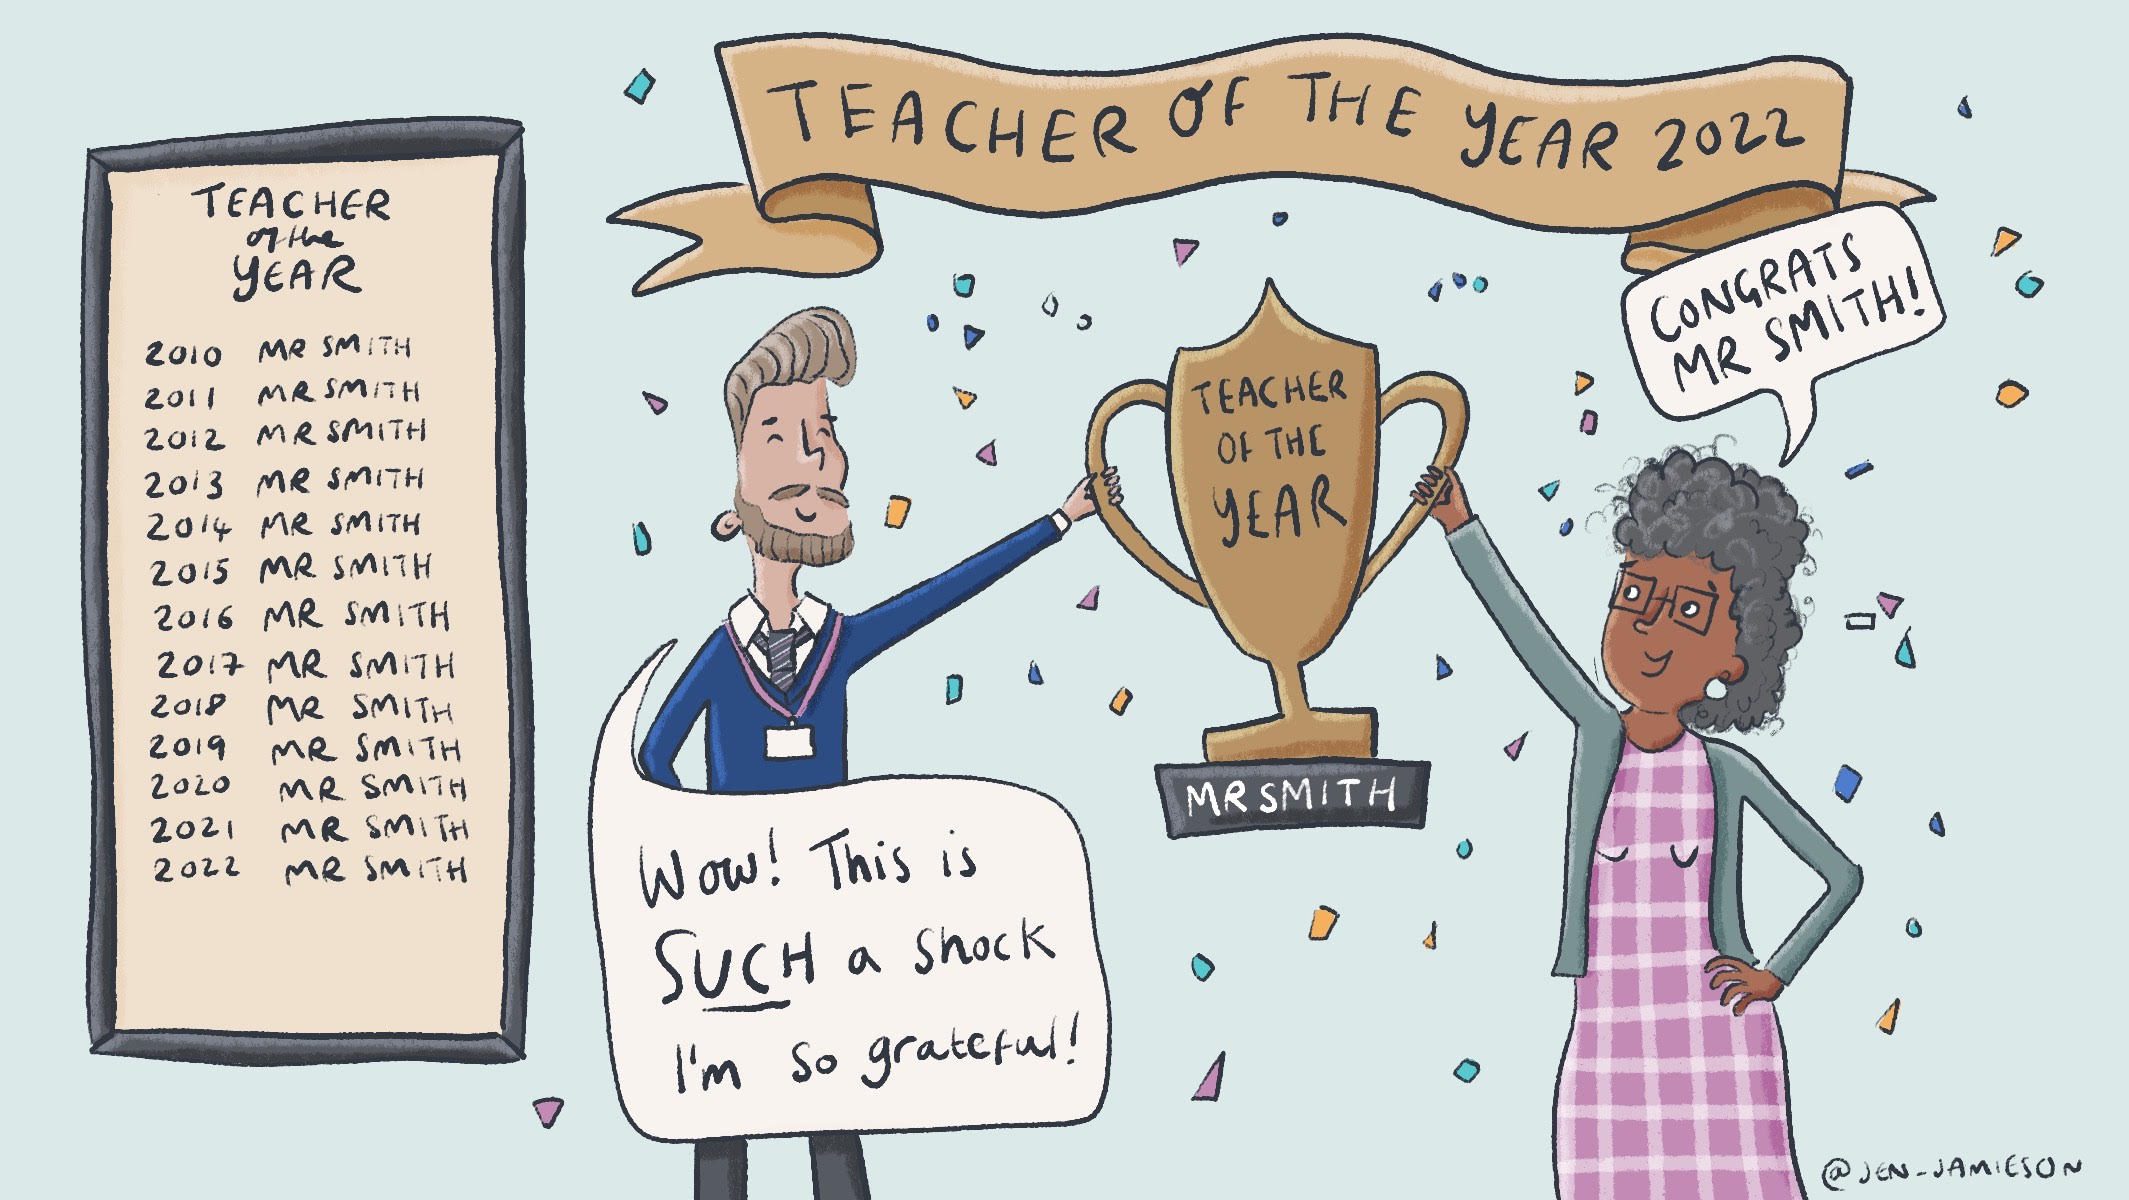 Illustration of teacher winning Teaching of the Year